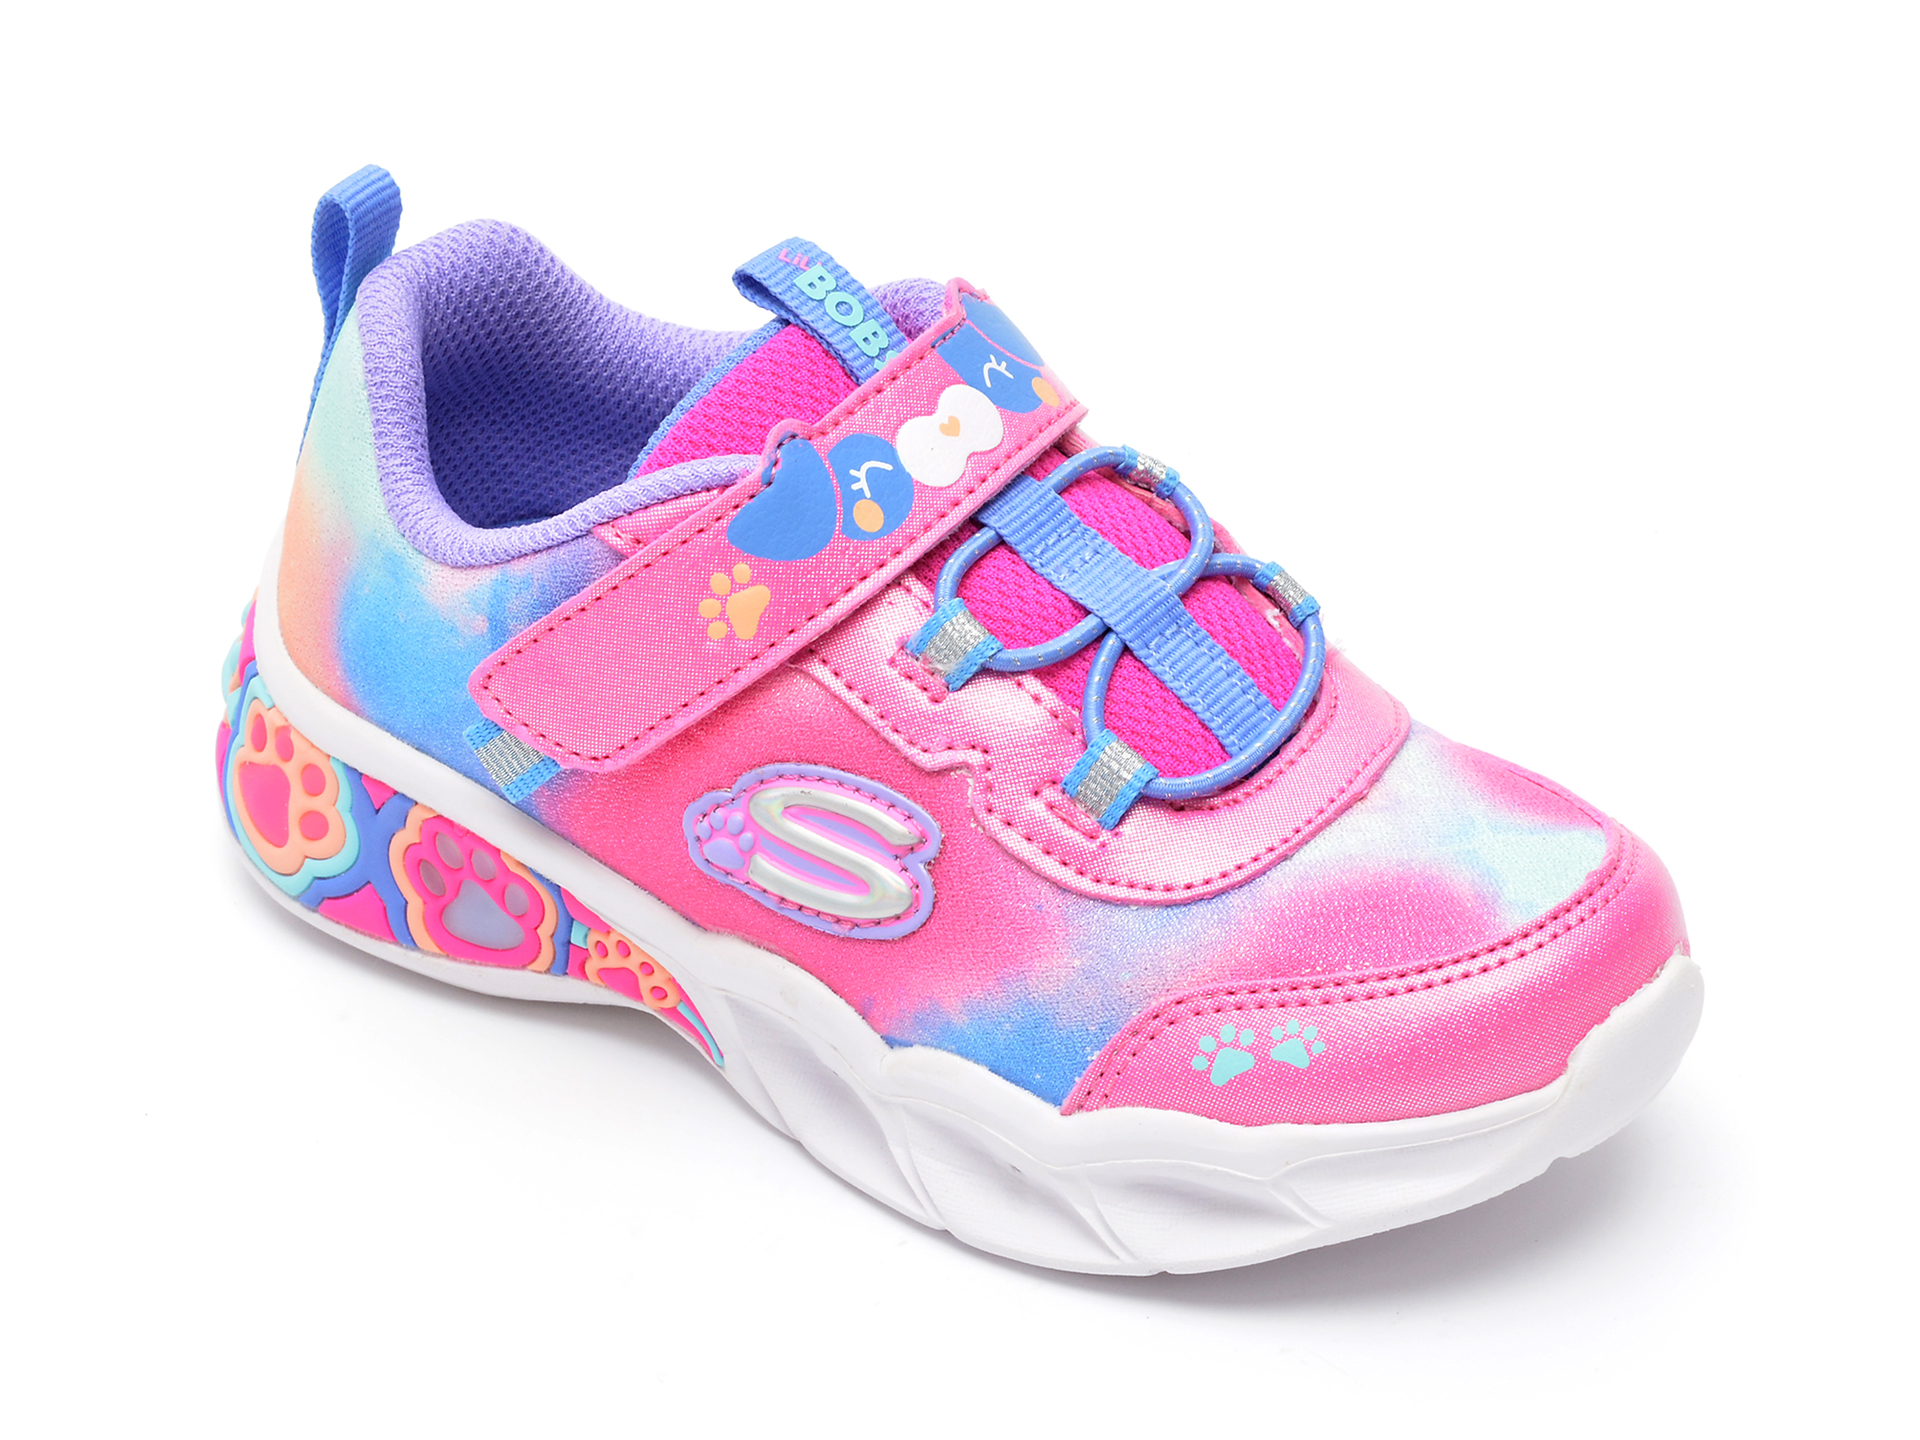 Pantofi sport SKECHERS roz, LIL BOBS, din piele ecologica /copii/incaltaminte